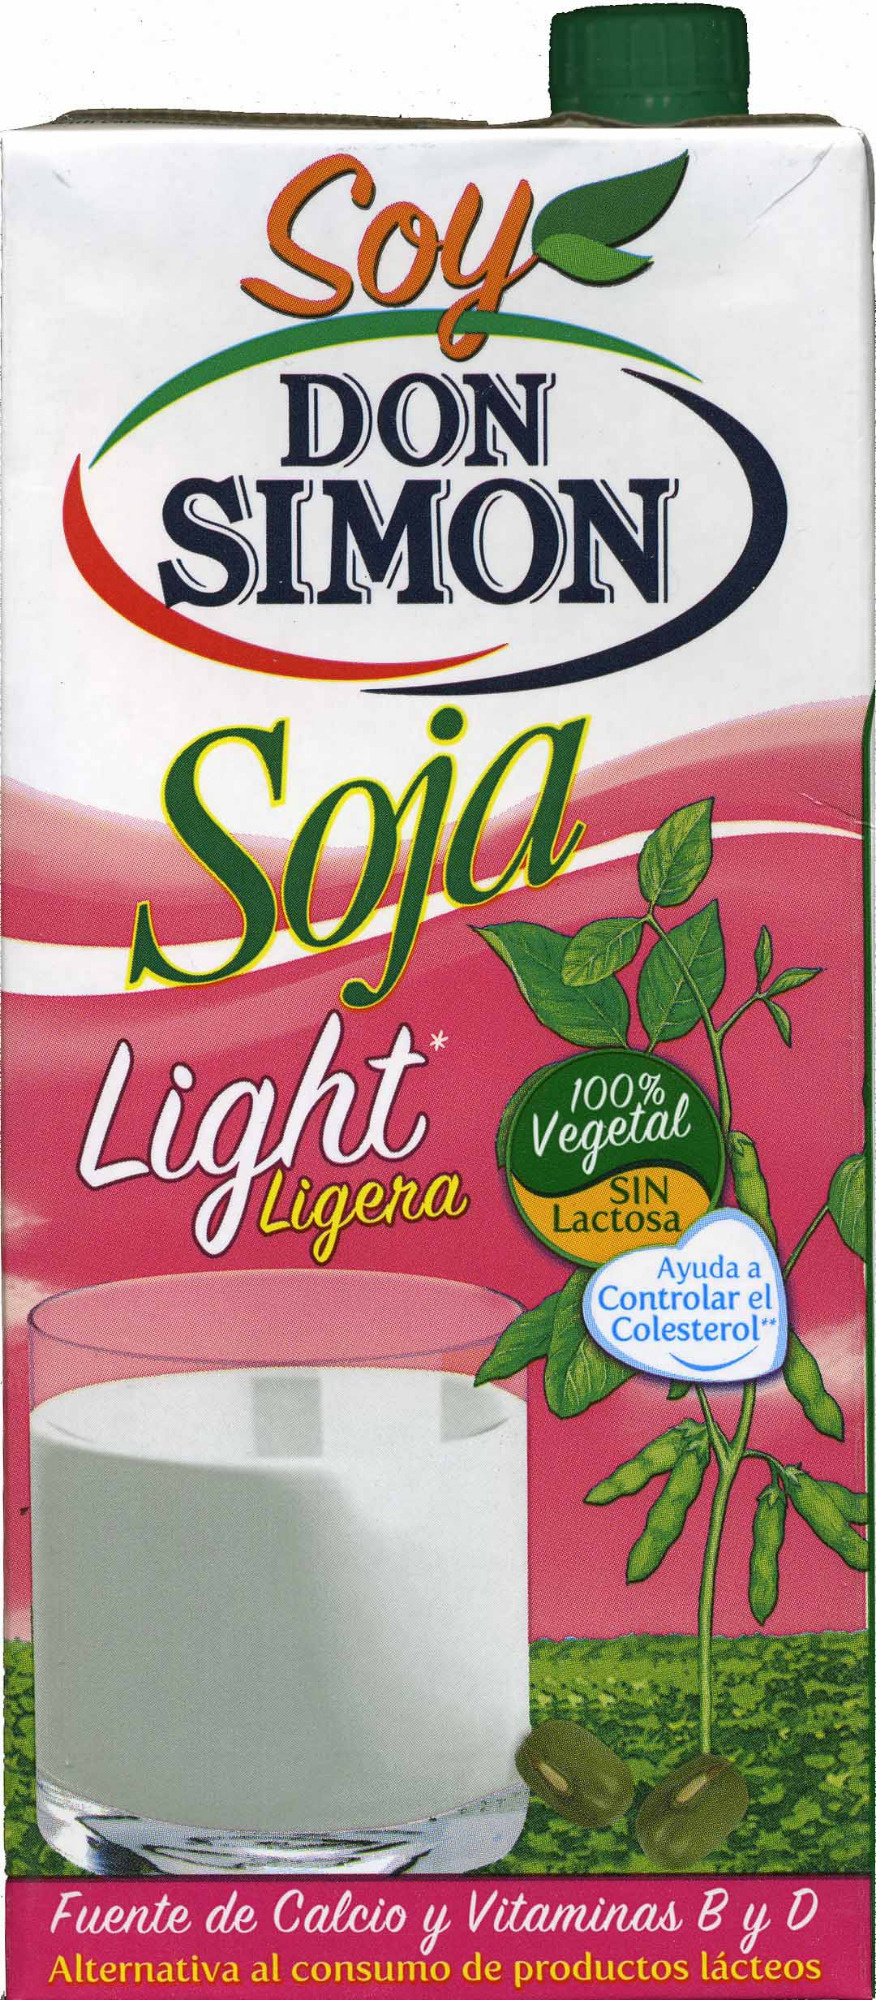 Soy Don Simón Soja Light - Product - es